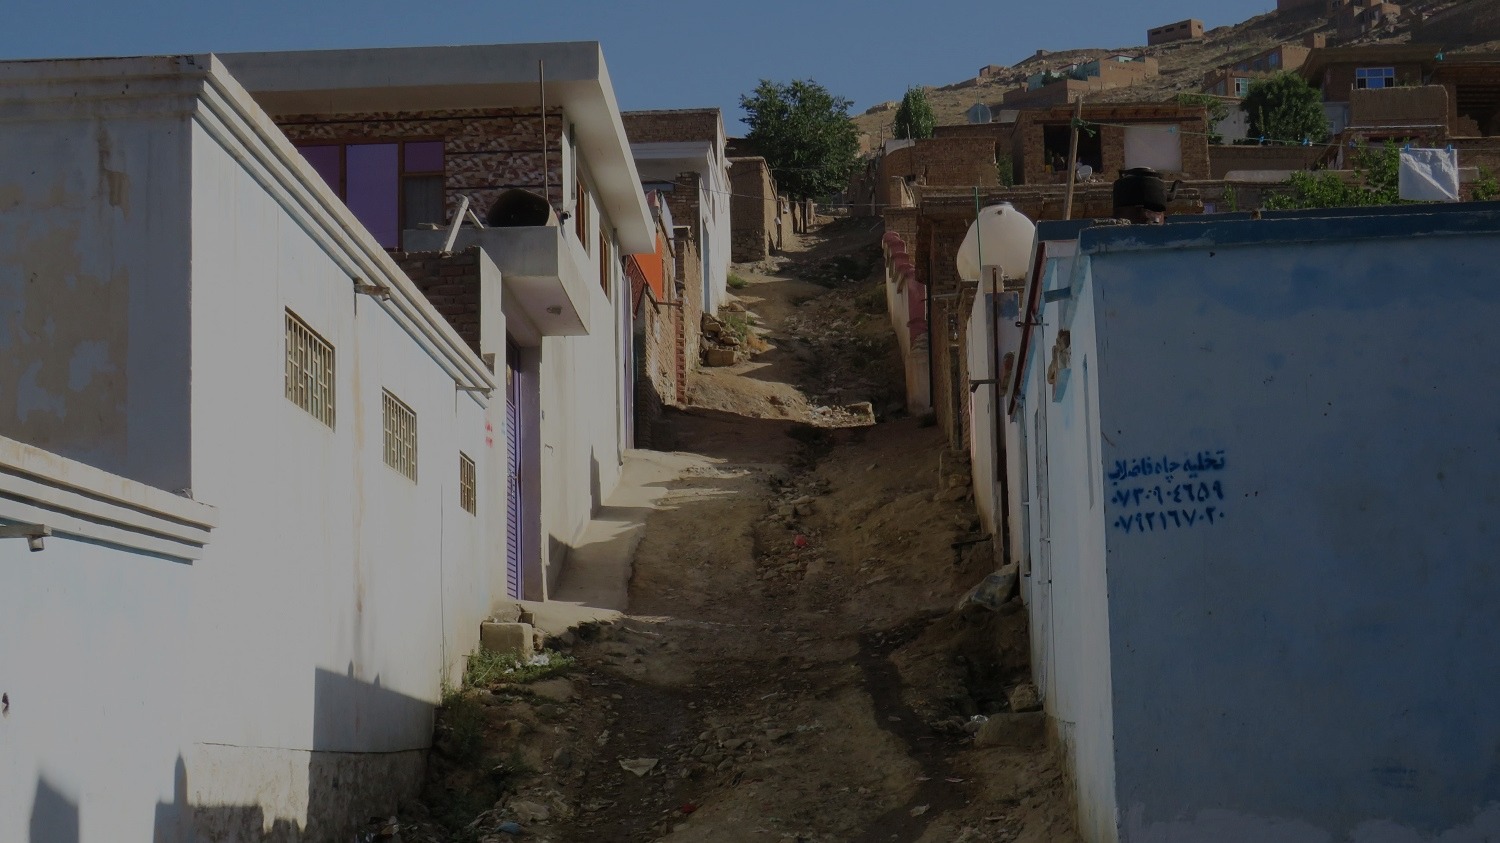 Afghanistan: Upgraded infrastructures transform women’s lives in informal settlements